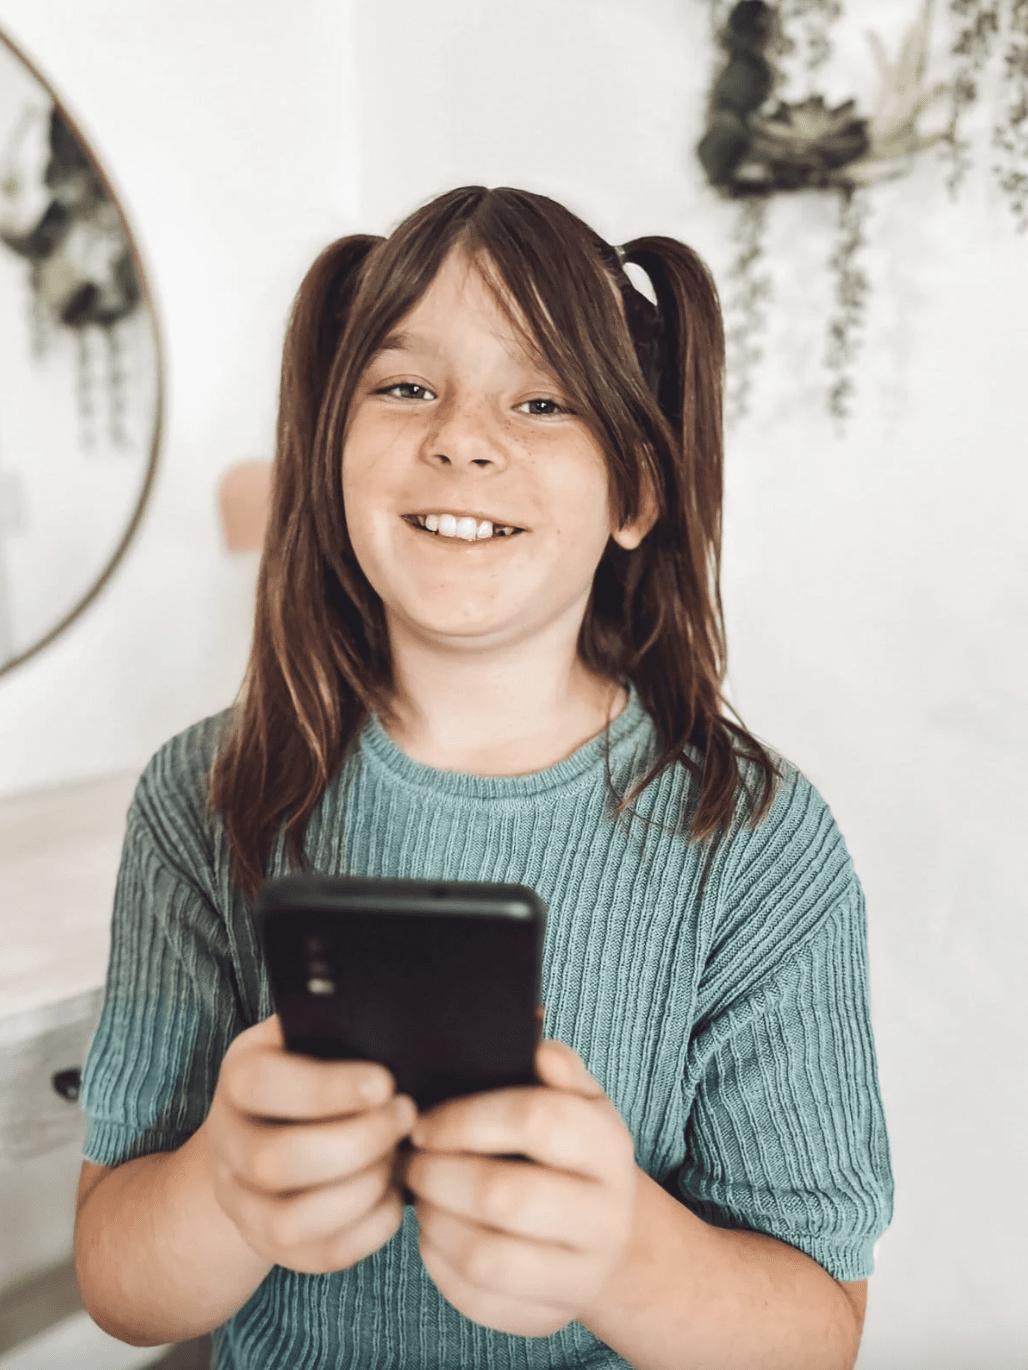 troomi phone for kids